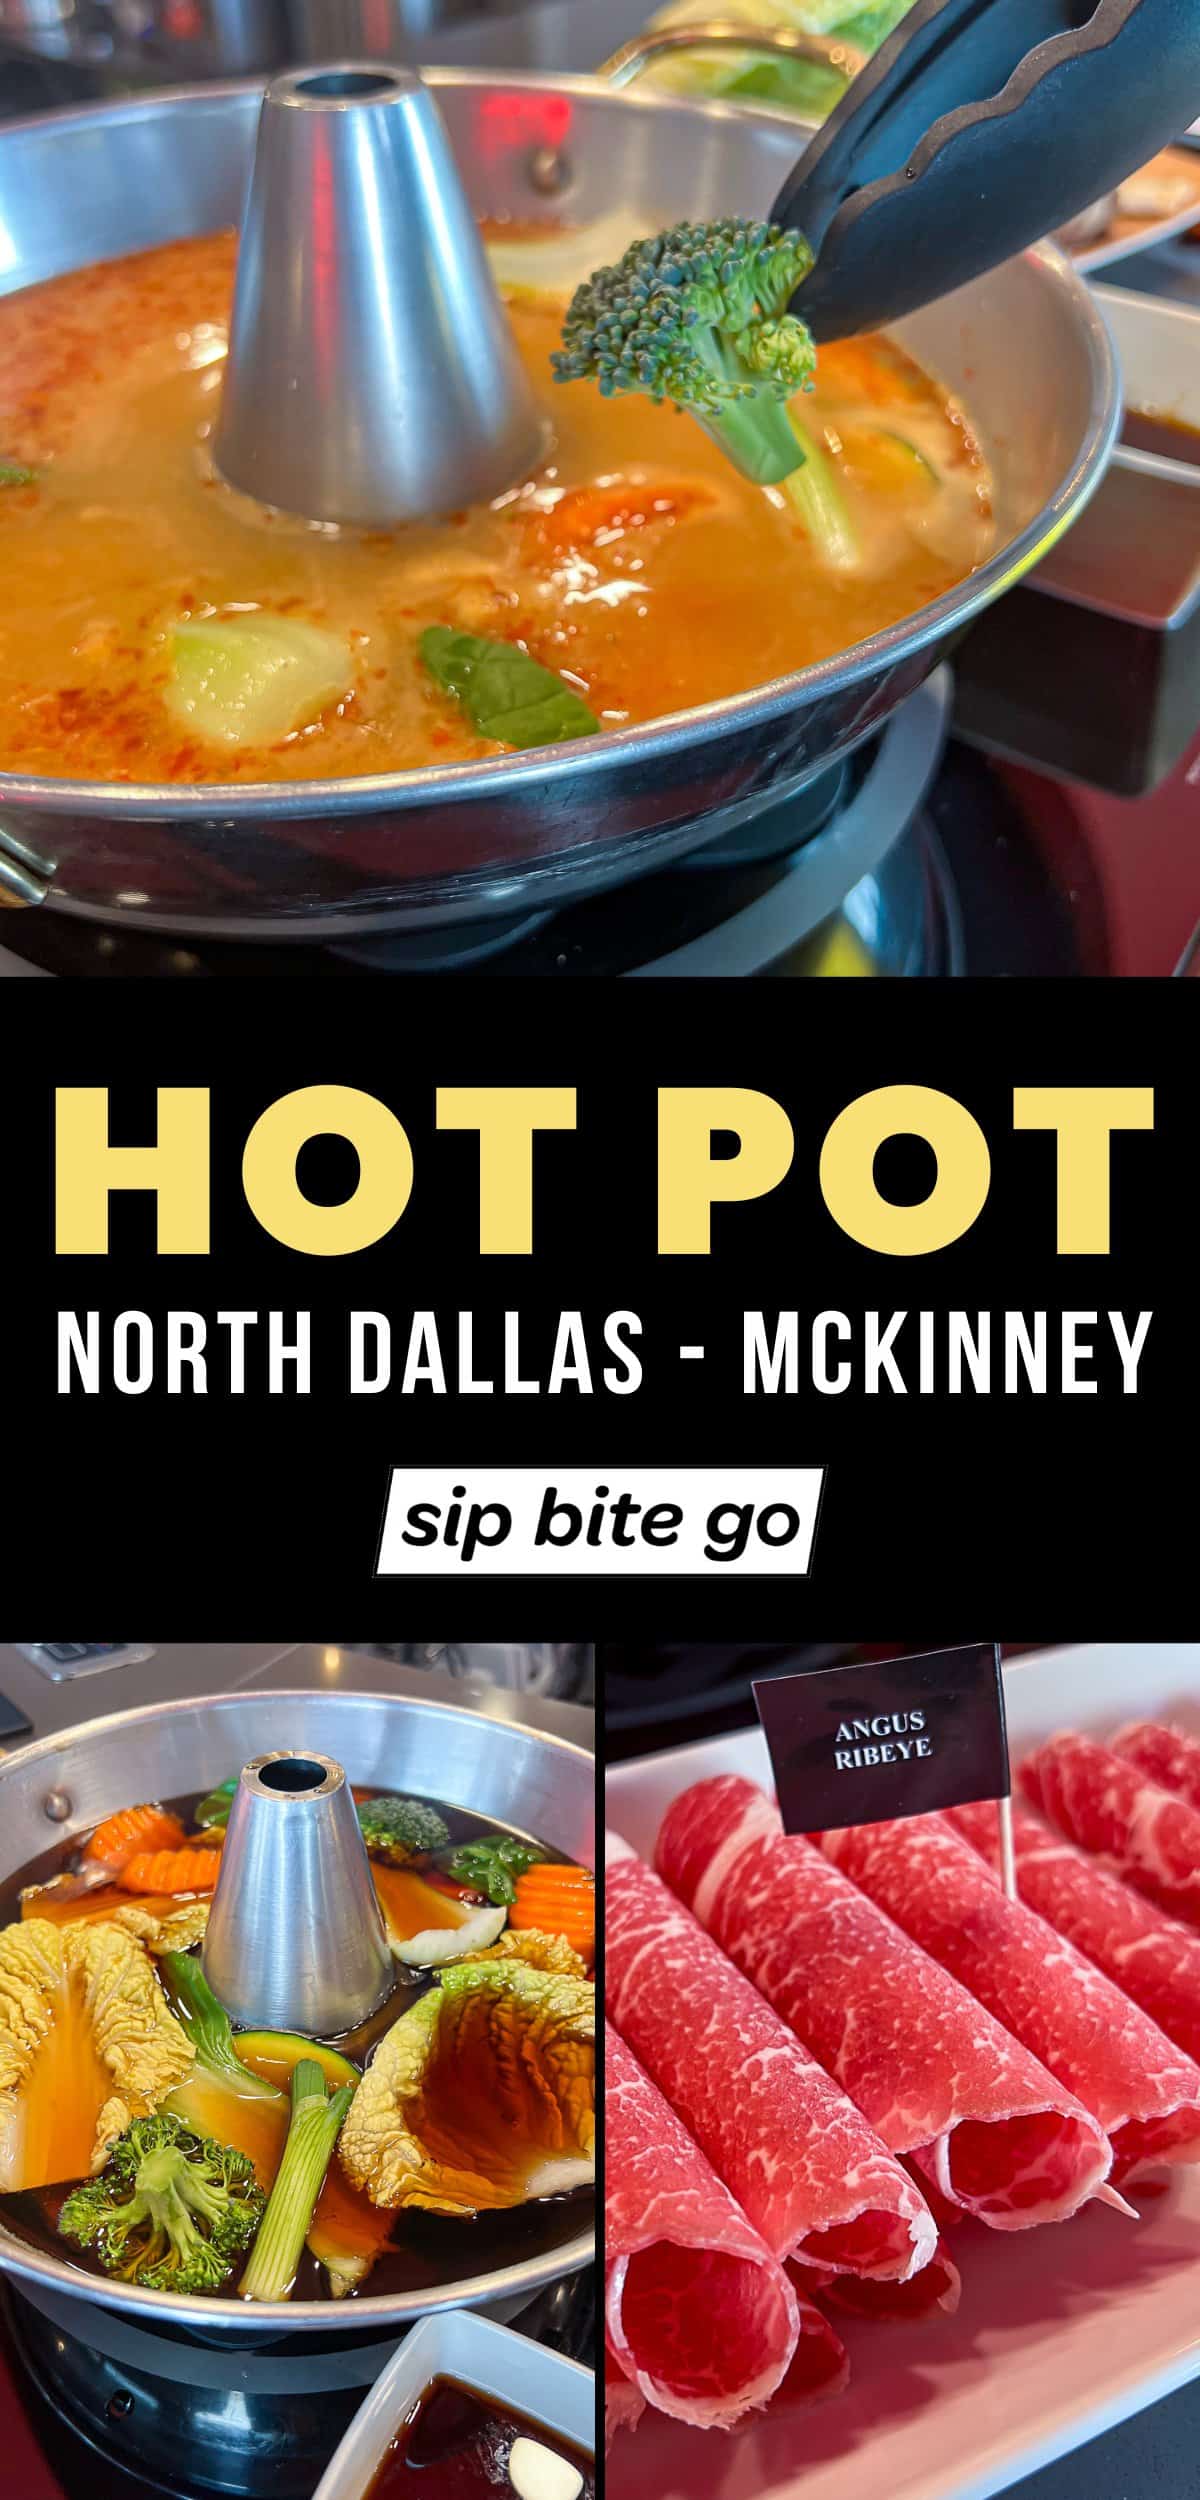 Tabu Shabu McKinney Restaurant with Hot Pot in North Dallas with text overlay Sip Bite Go.jpeg